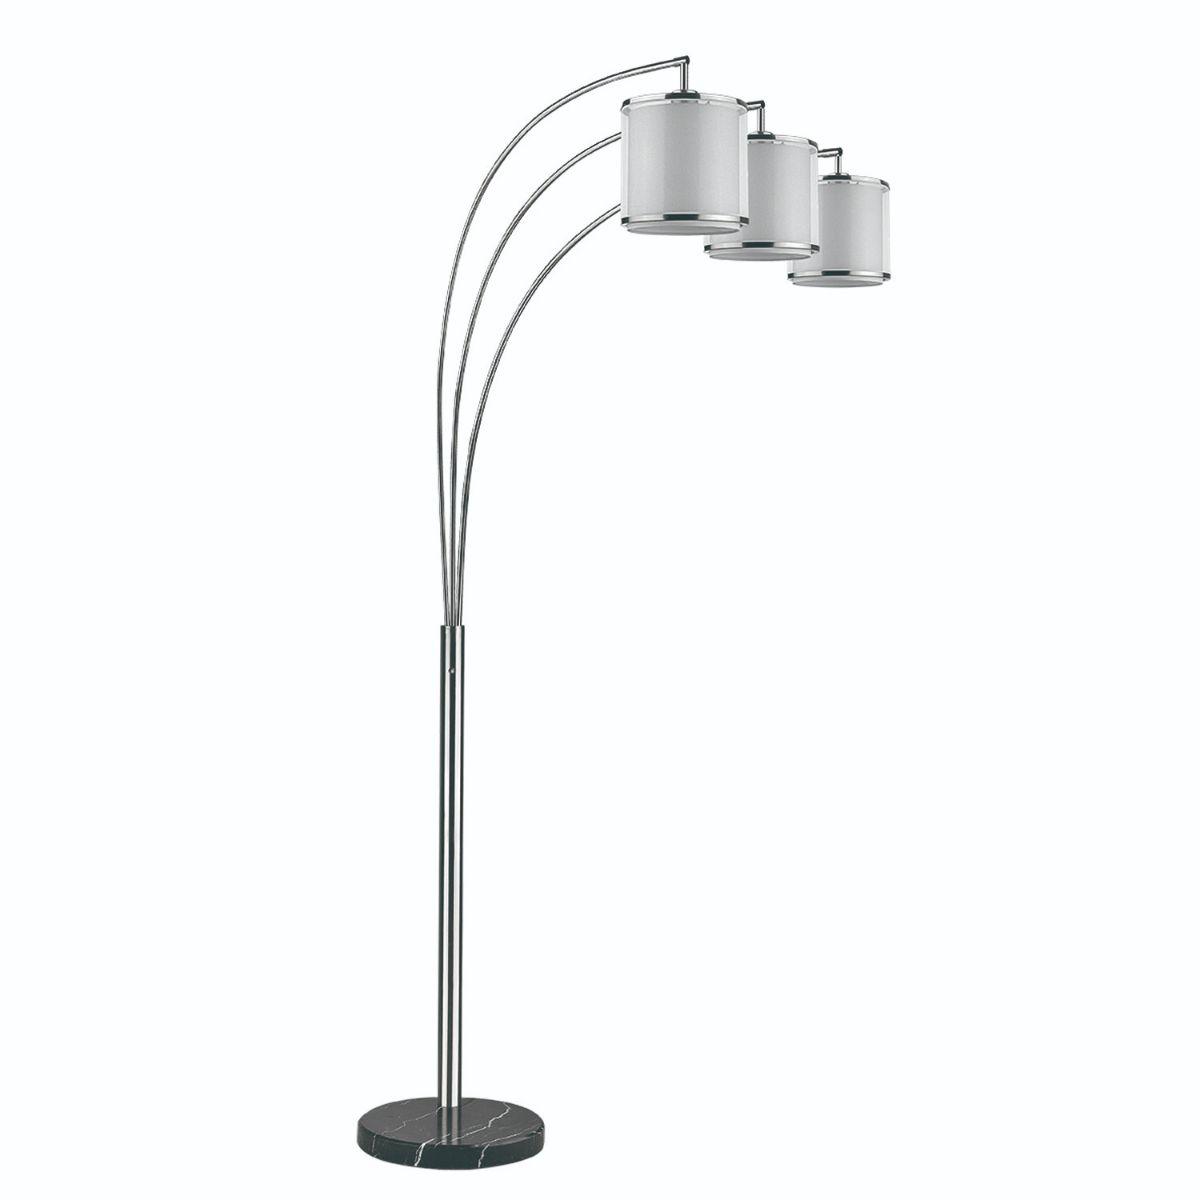 Lux 3 Lights Adjustable Tree Floor Lamp Black Marble Base with Brushed Nickel Finish